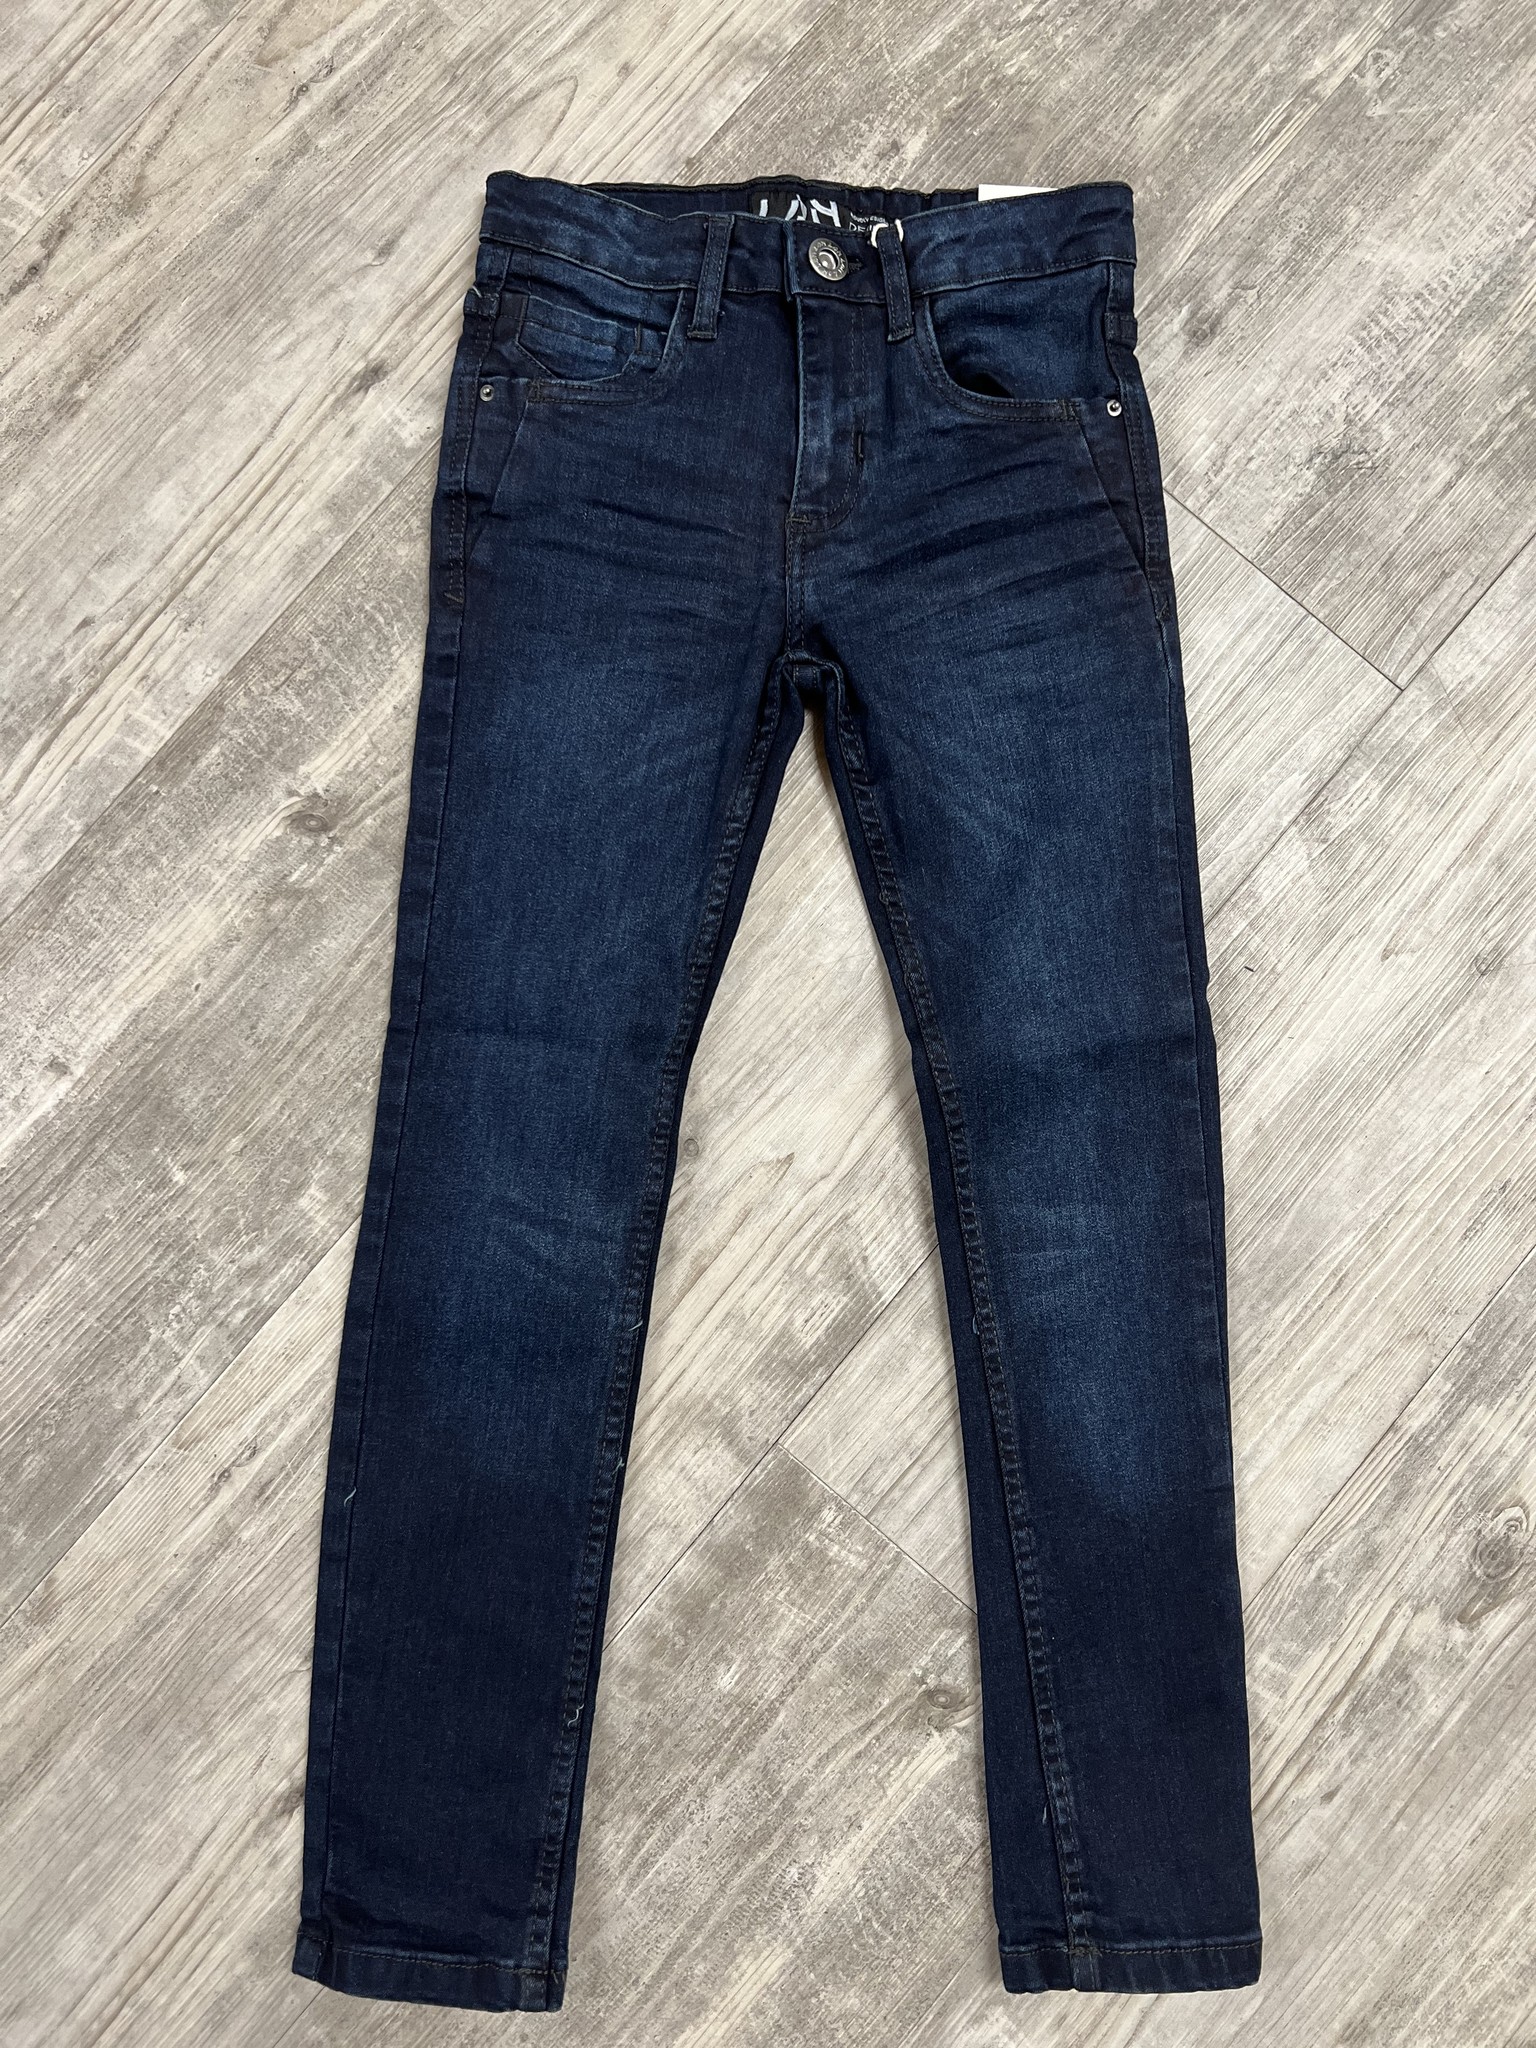 Slim Fit Ultra Comfort Jeans - Dark Wash